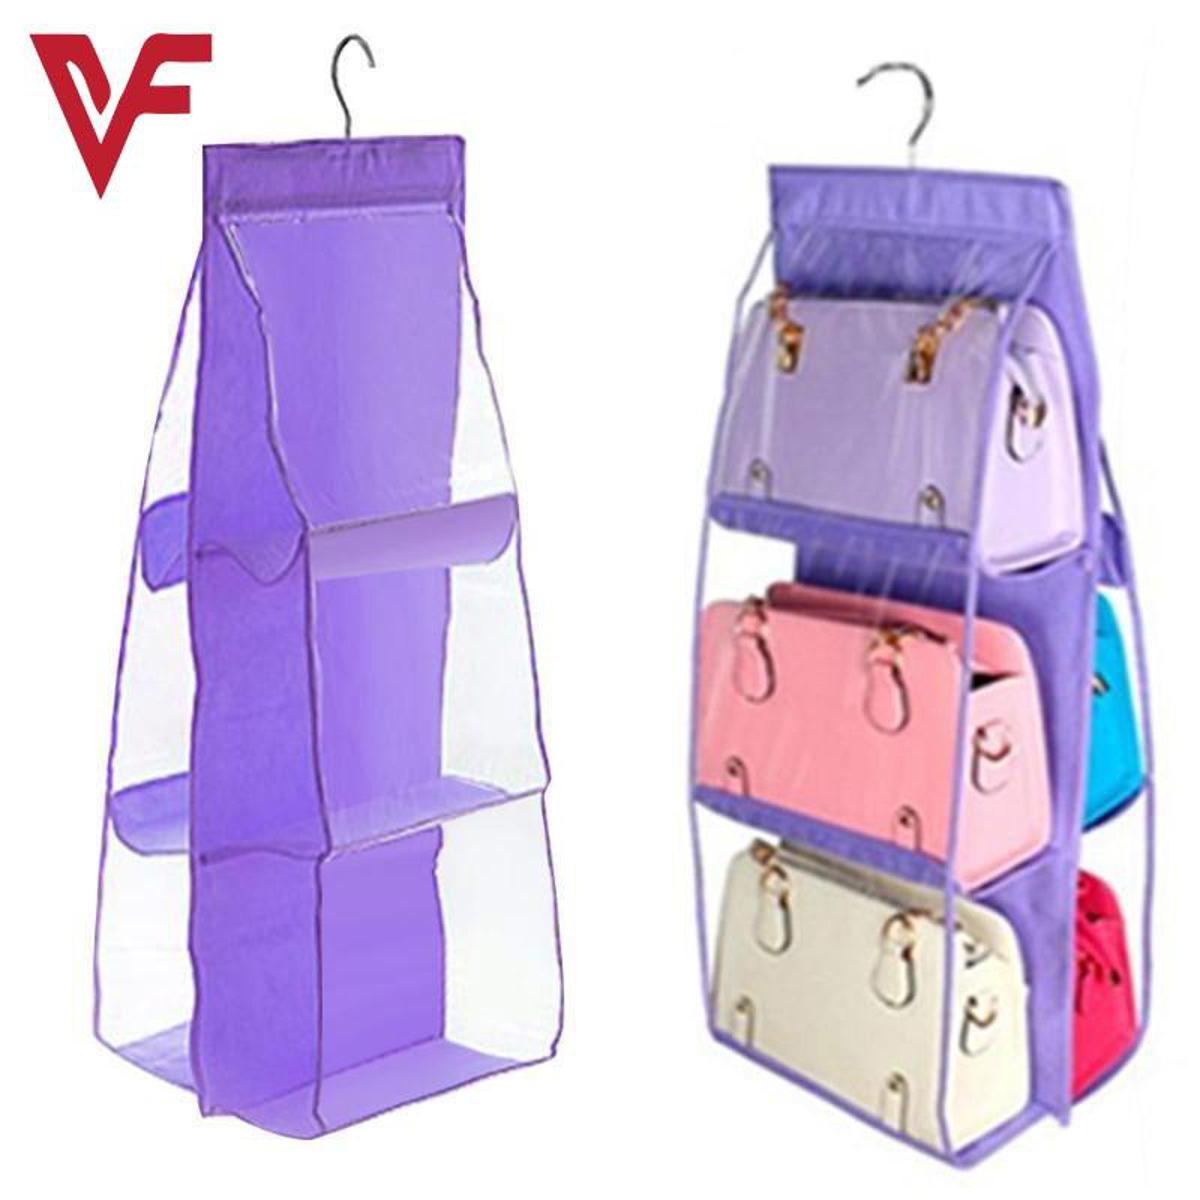 Hanging Handbag Organiser 6 Pockets Shelf Bag Storage Holder Closet Wardrobe